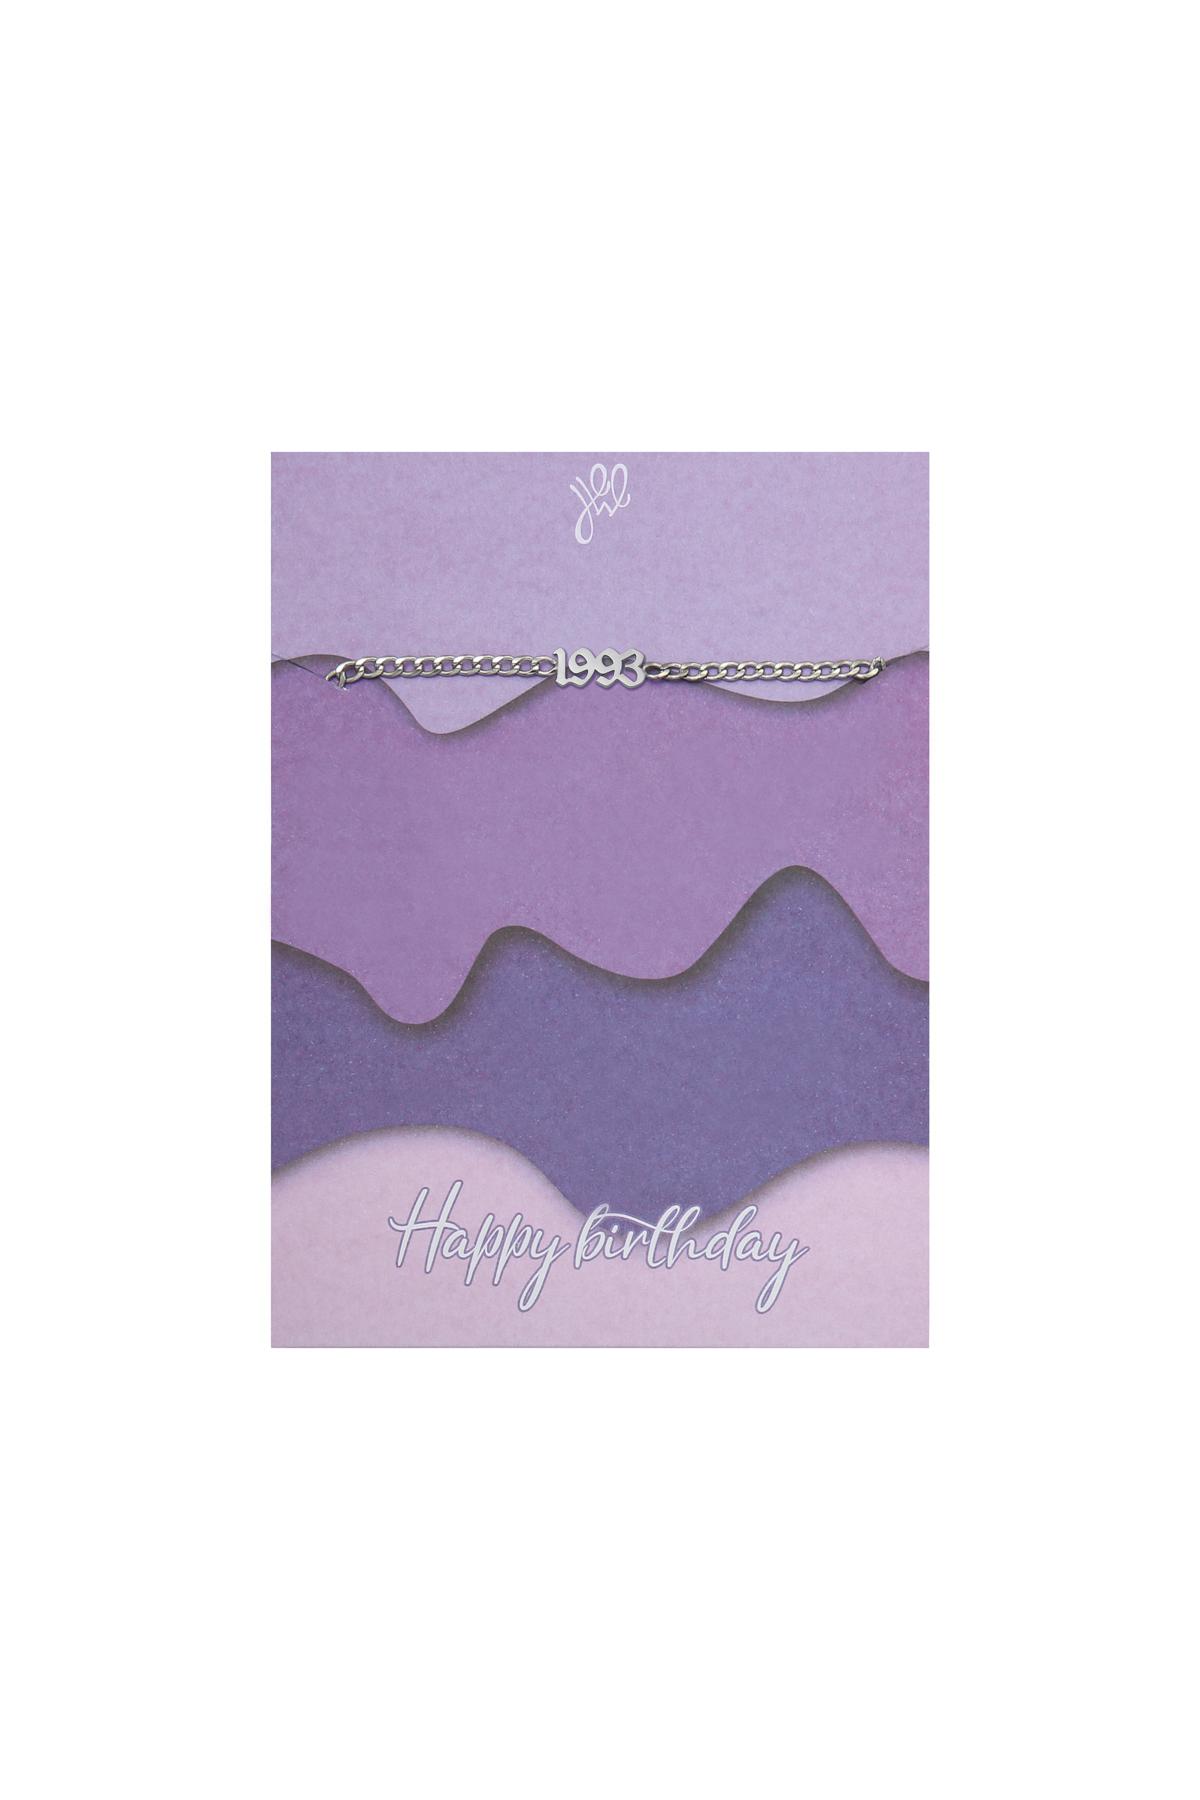 Silber / Armband Happy Birthday Years - 1993 Silber Edelstahl Bild3